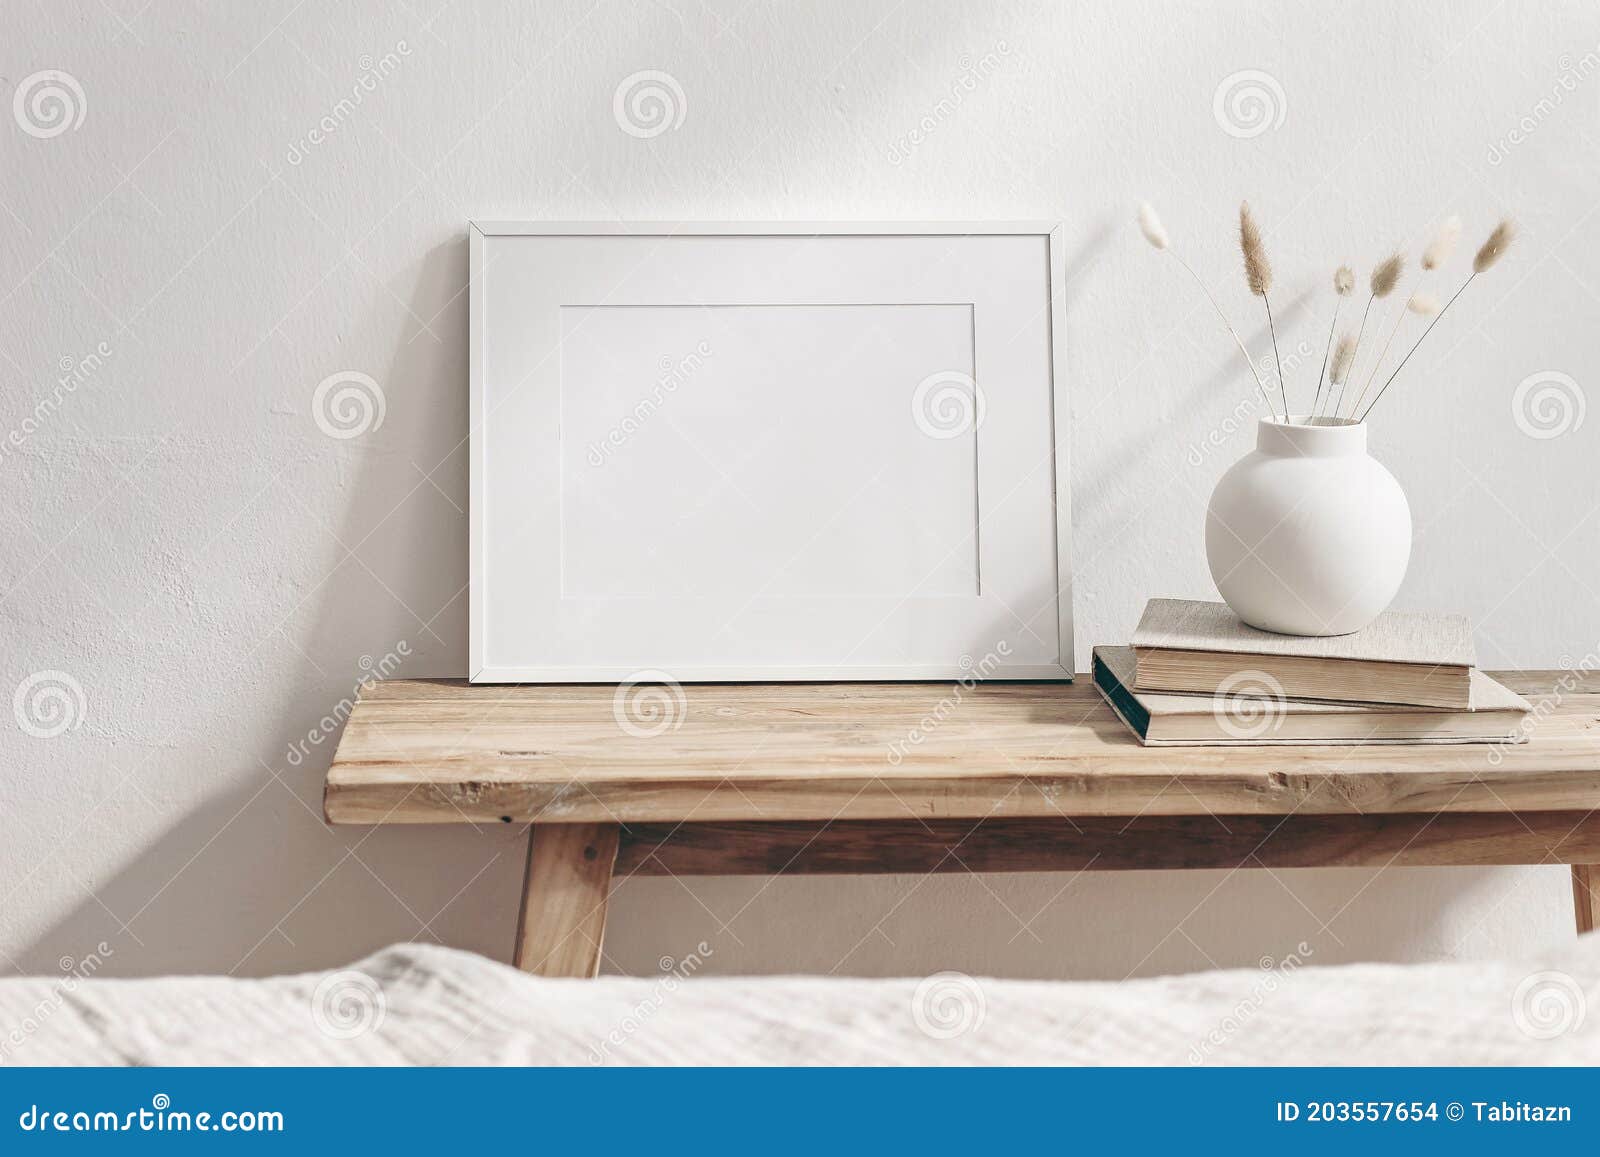 winter still life. horizontal white frame mockup on vintage wooden bench, table. modern white ceramic vase with pine